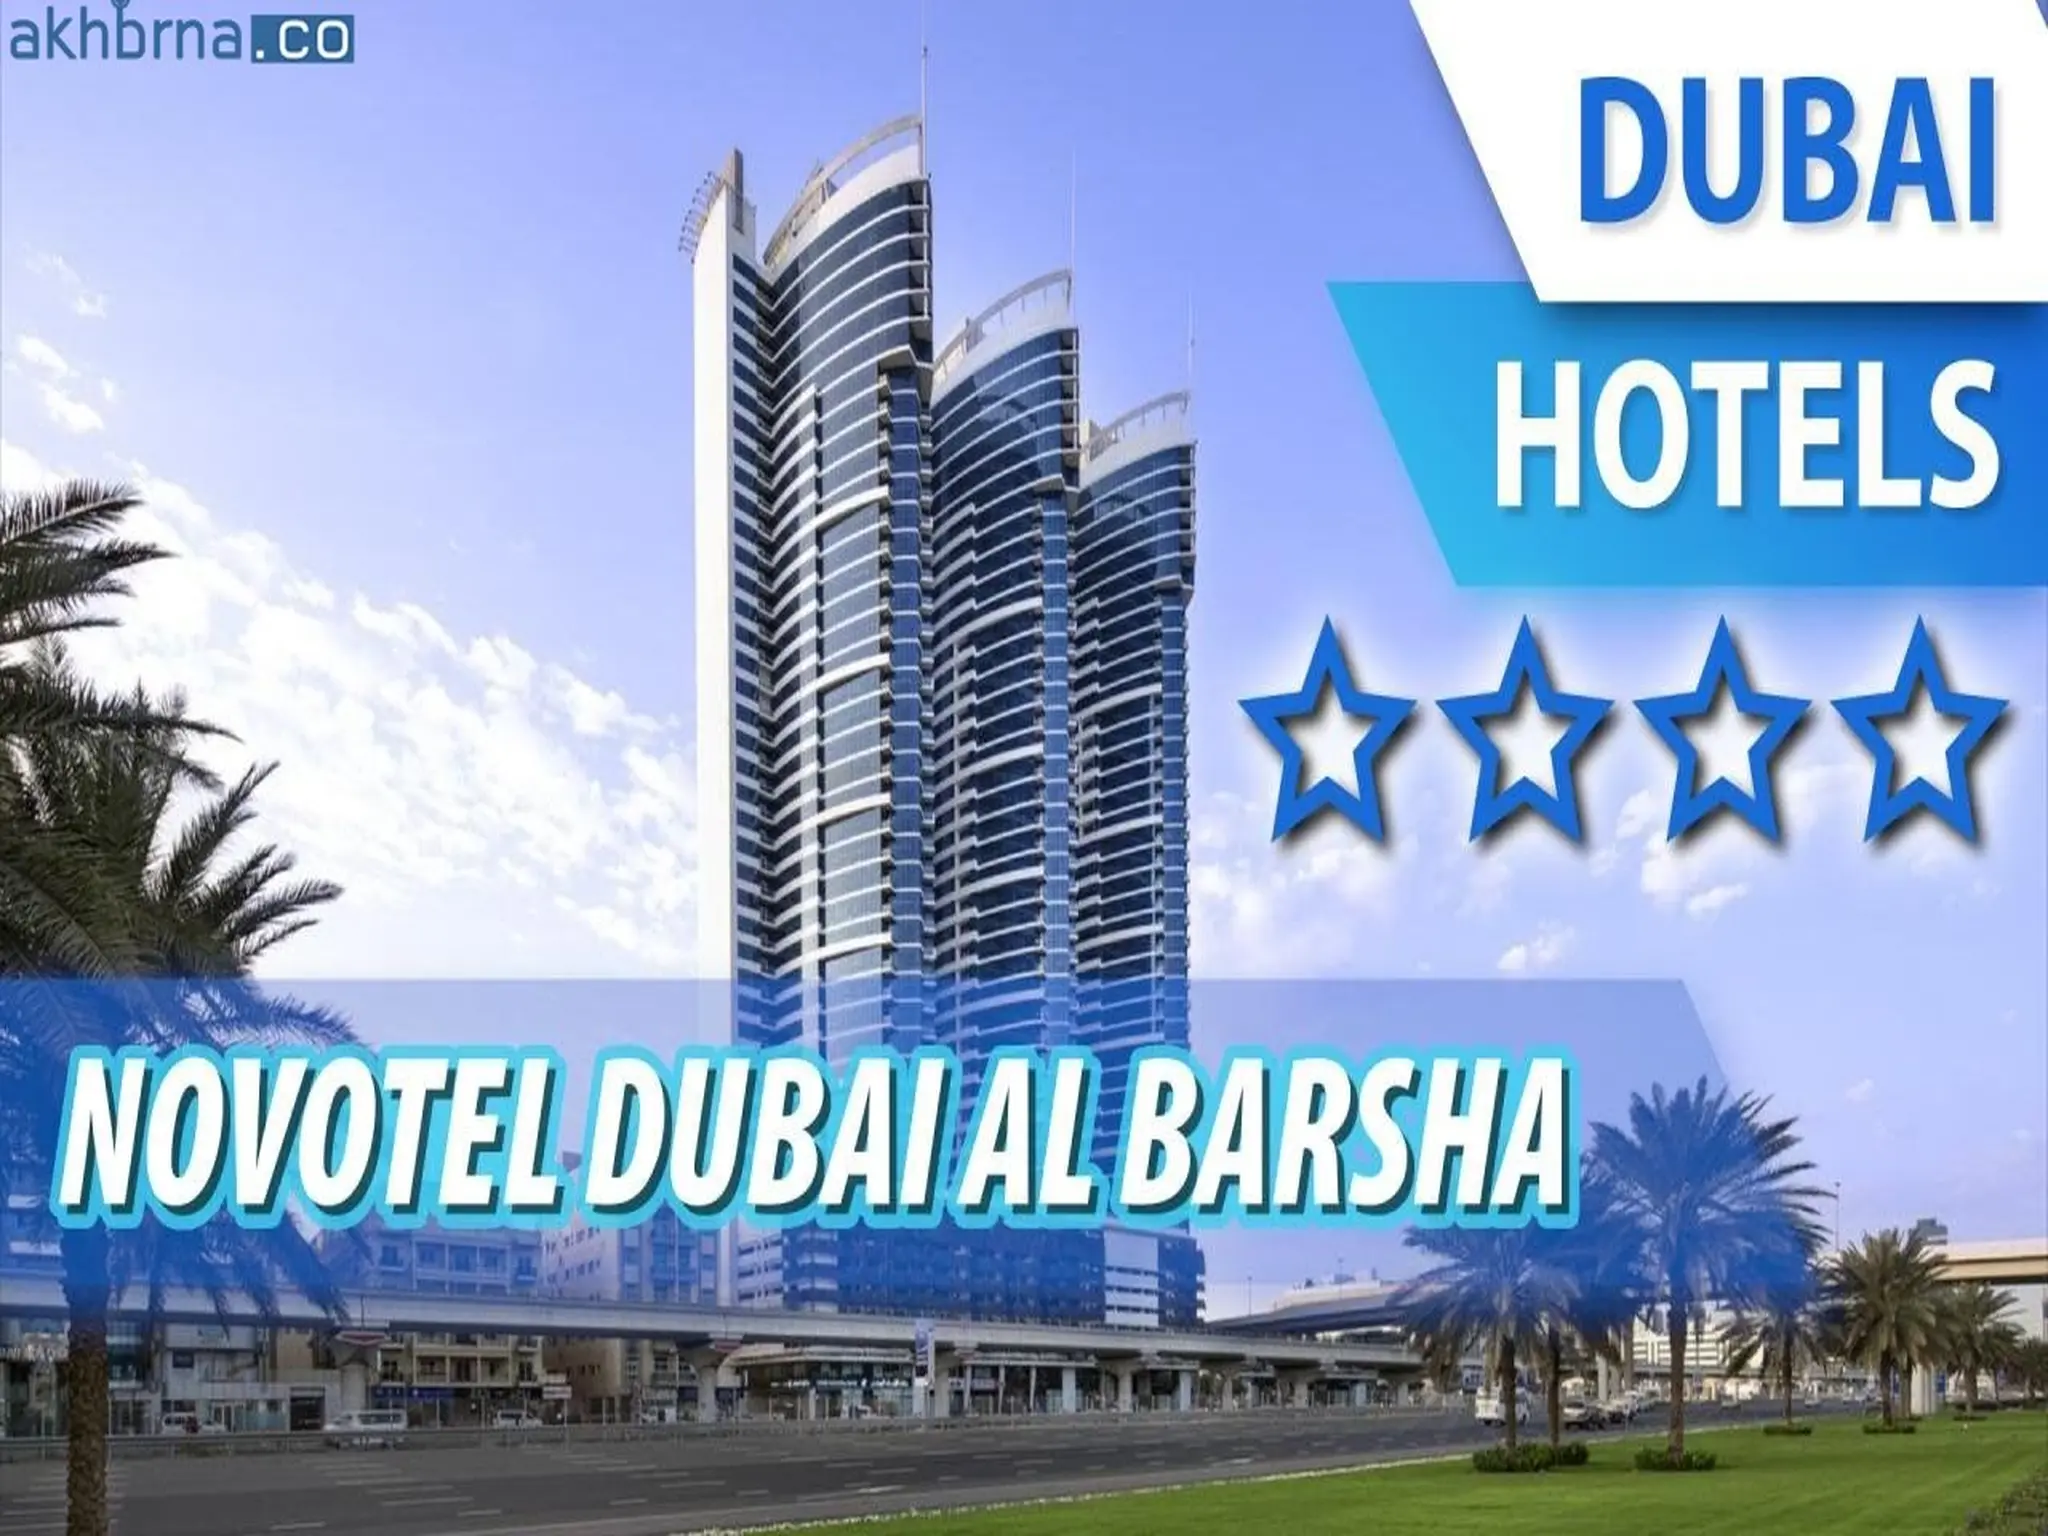 Dubai offers an amazing New Year Eve experience at Novotel Al Barsha 